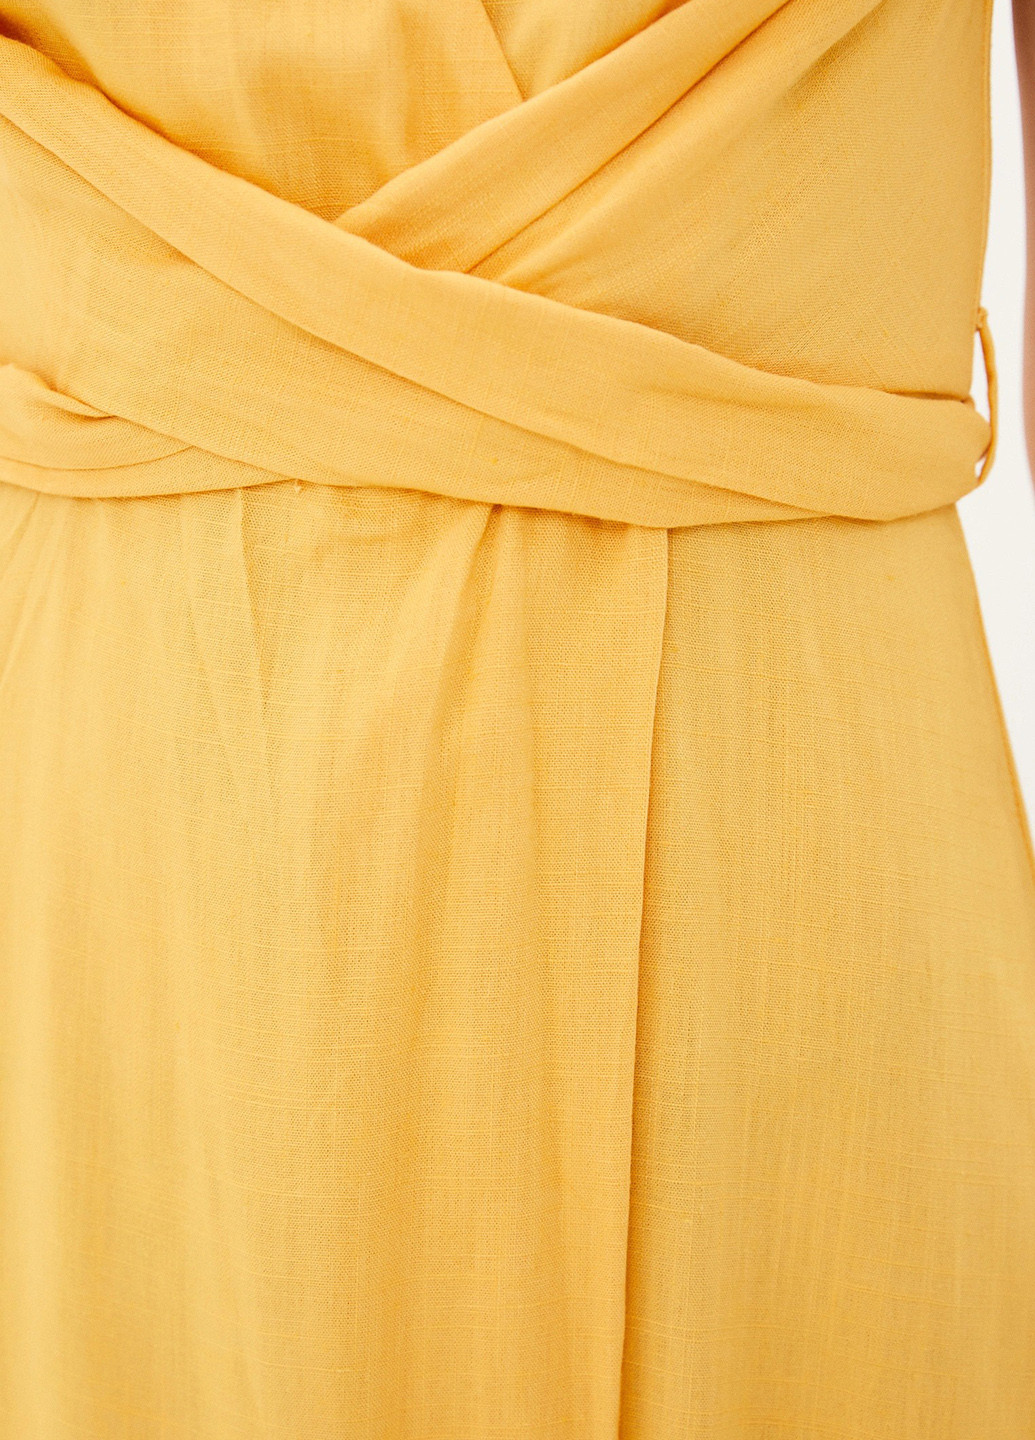 Желтое кэжуал платье на запах befree